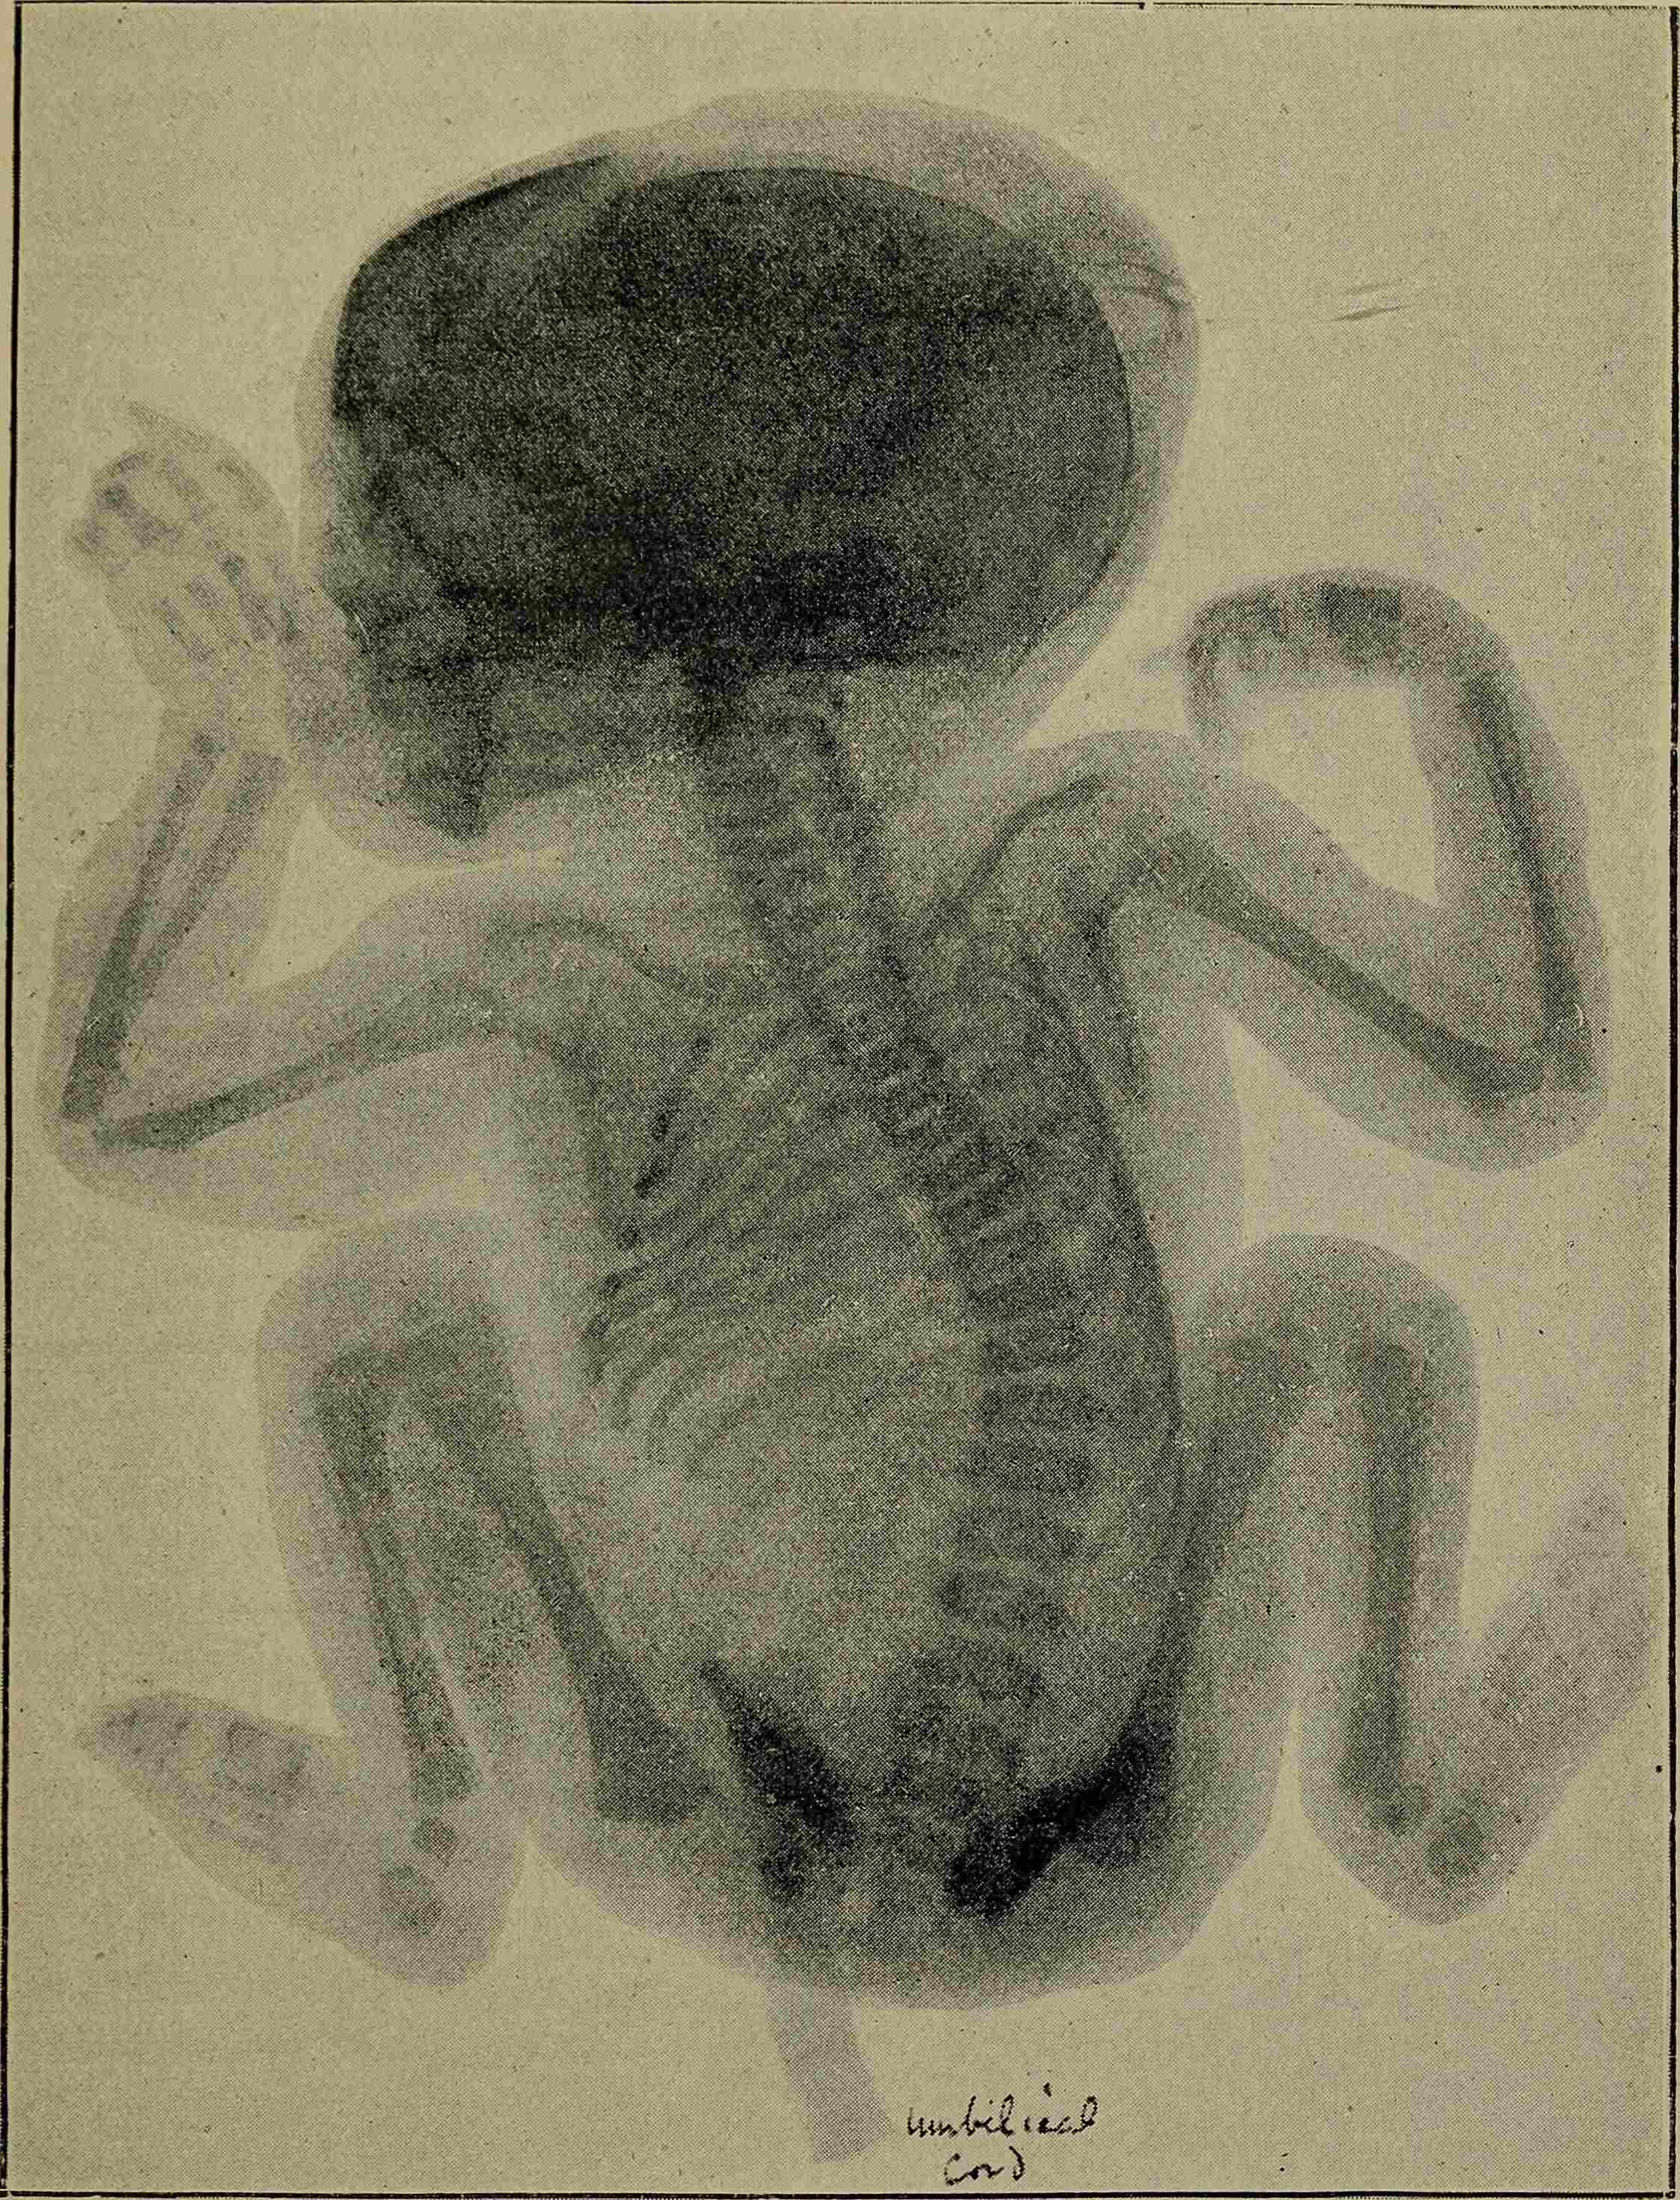 Images Wikimedia Commons/21 Walsh, David The_Röntgen_rays_in_medical_work_(1899)_(14570302349).jpg